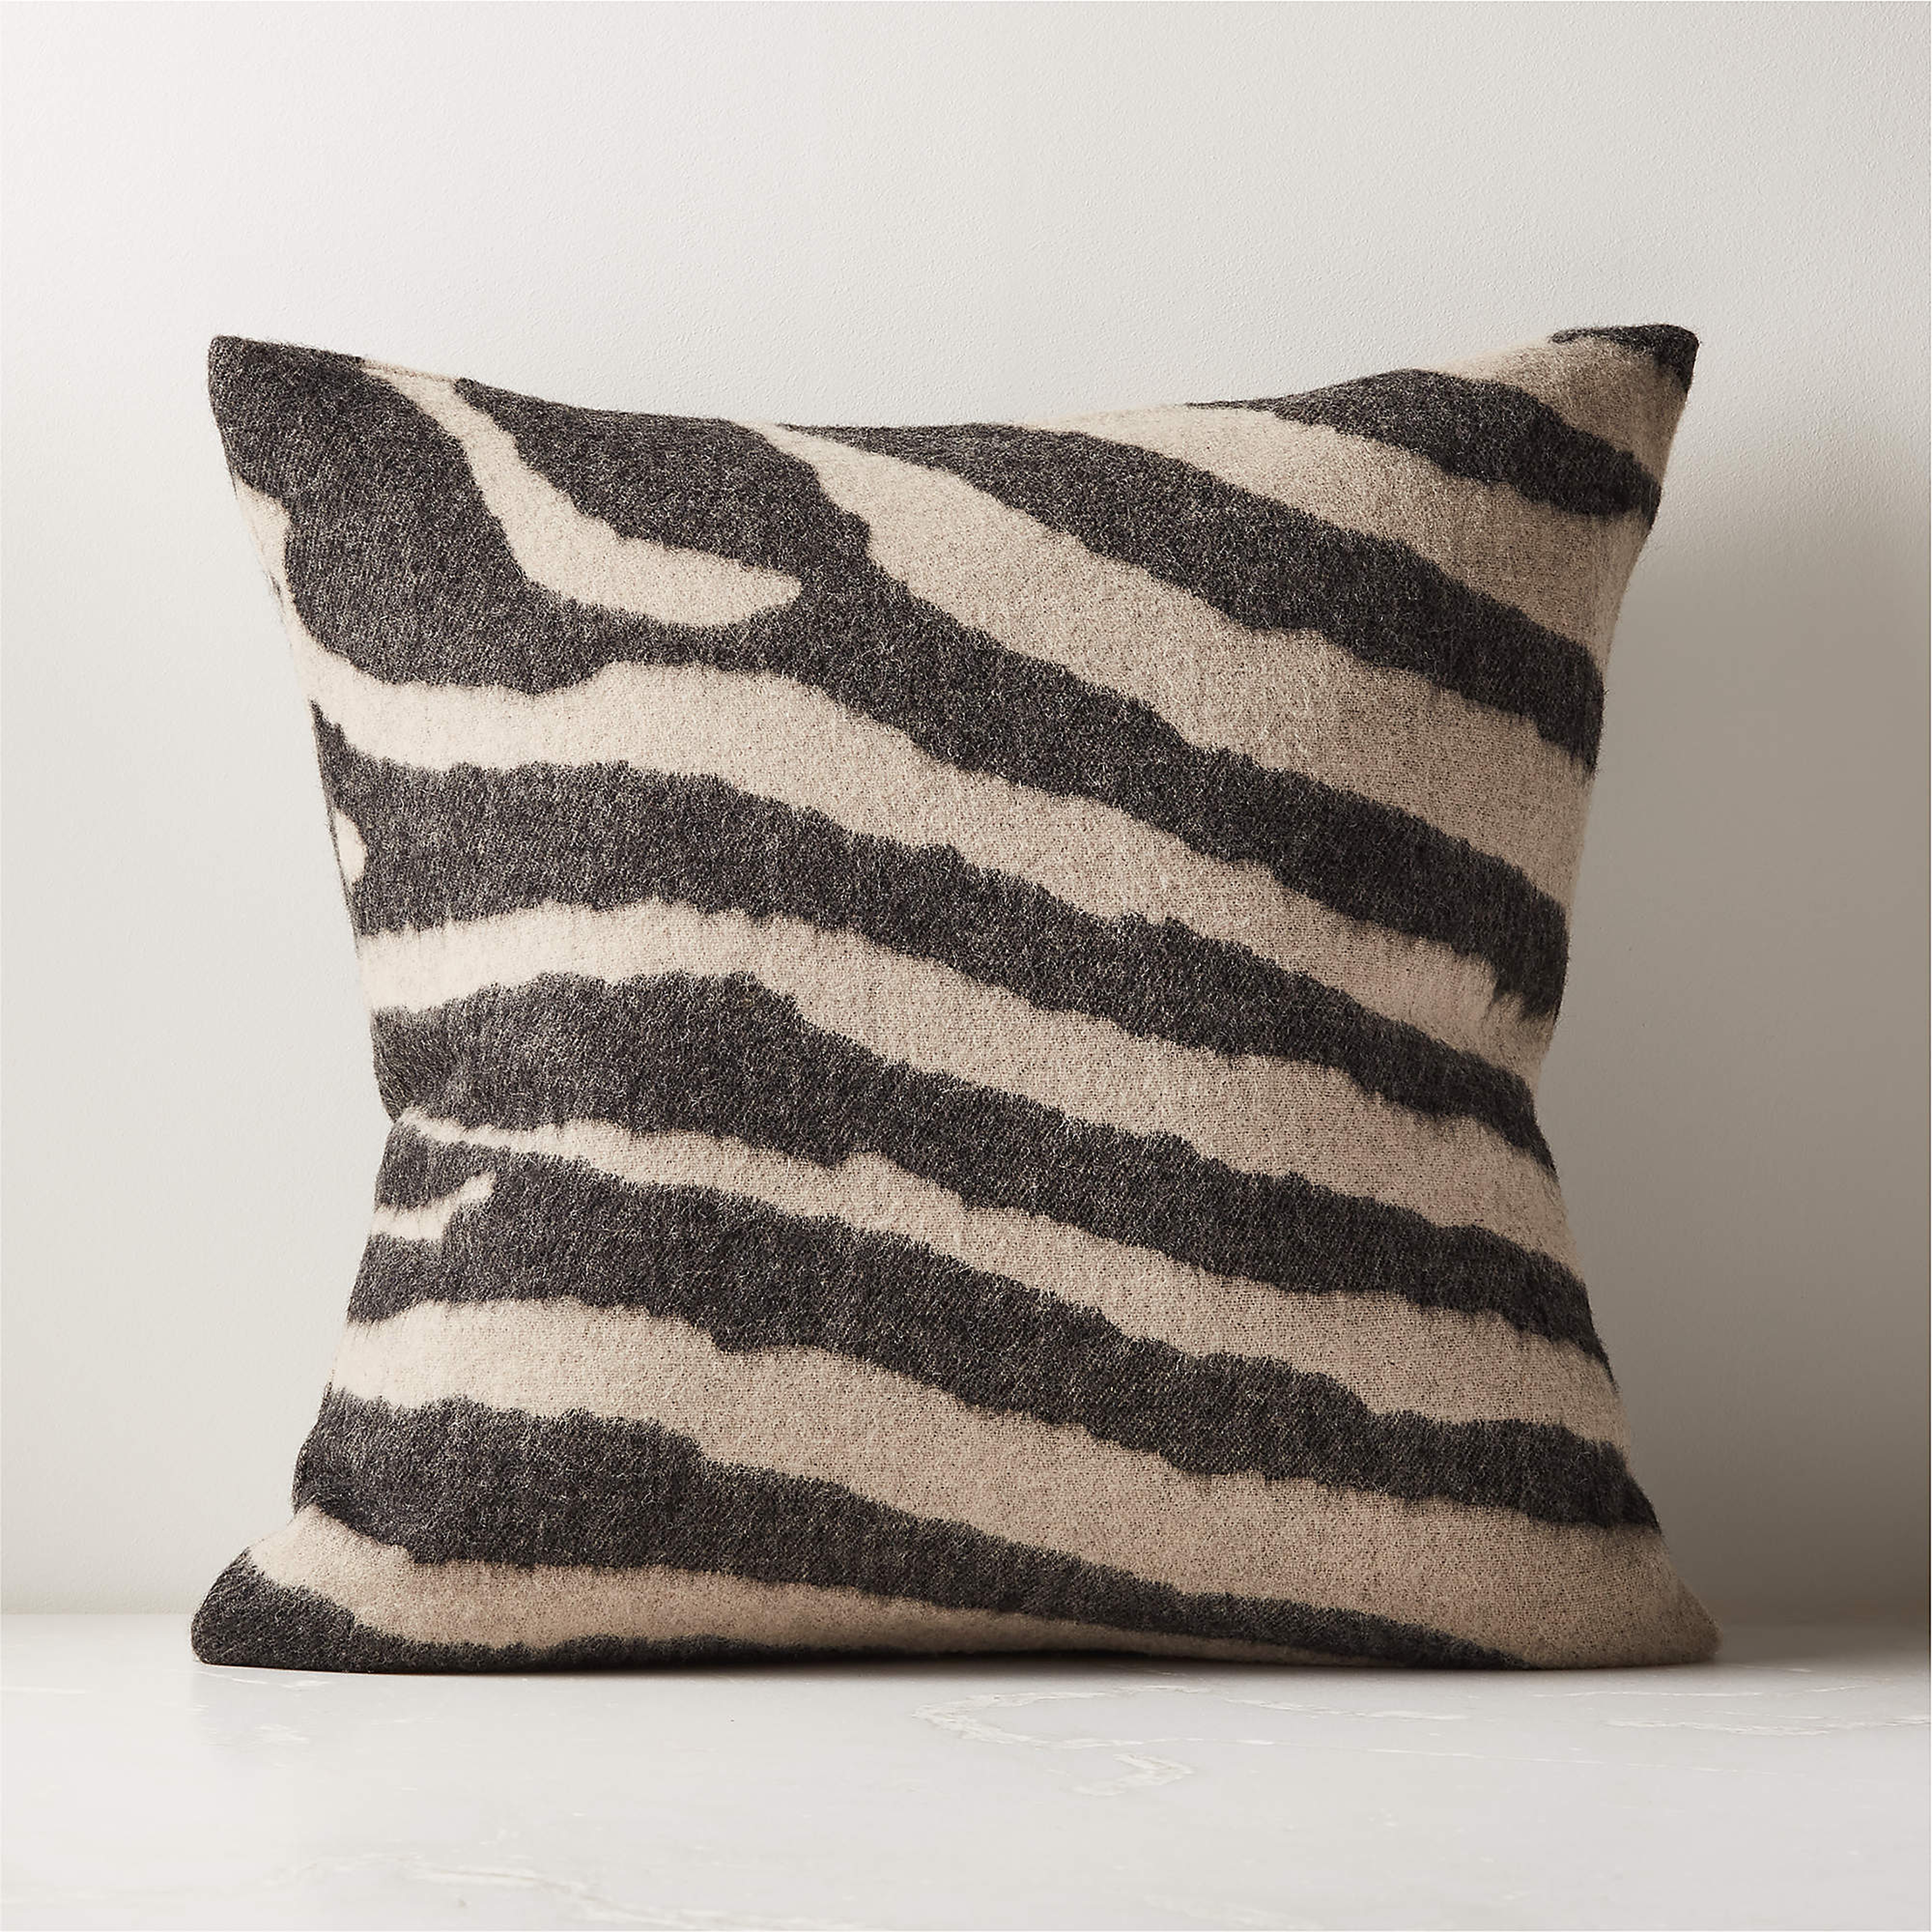 Jasira Tiger Print Wool Throw Pillow with Down-Alternative Insert 20" - CB2